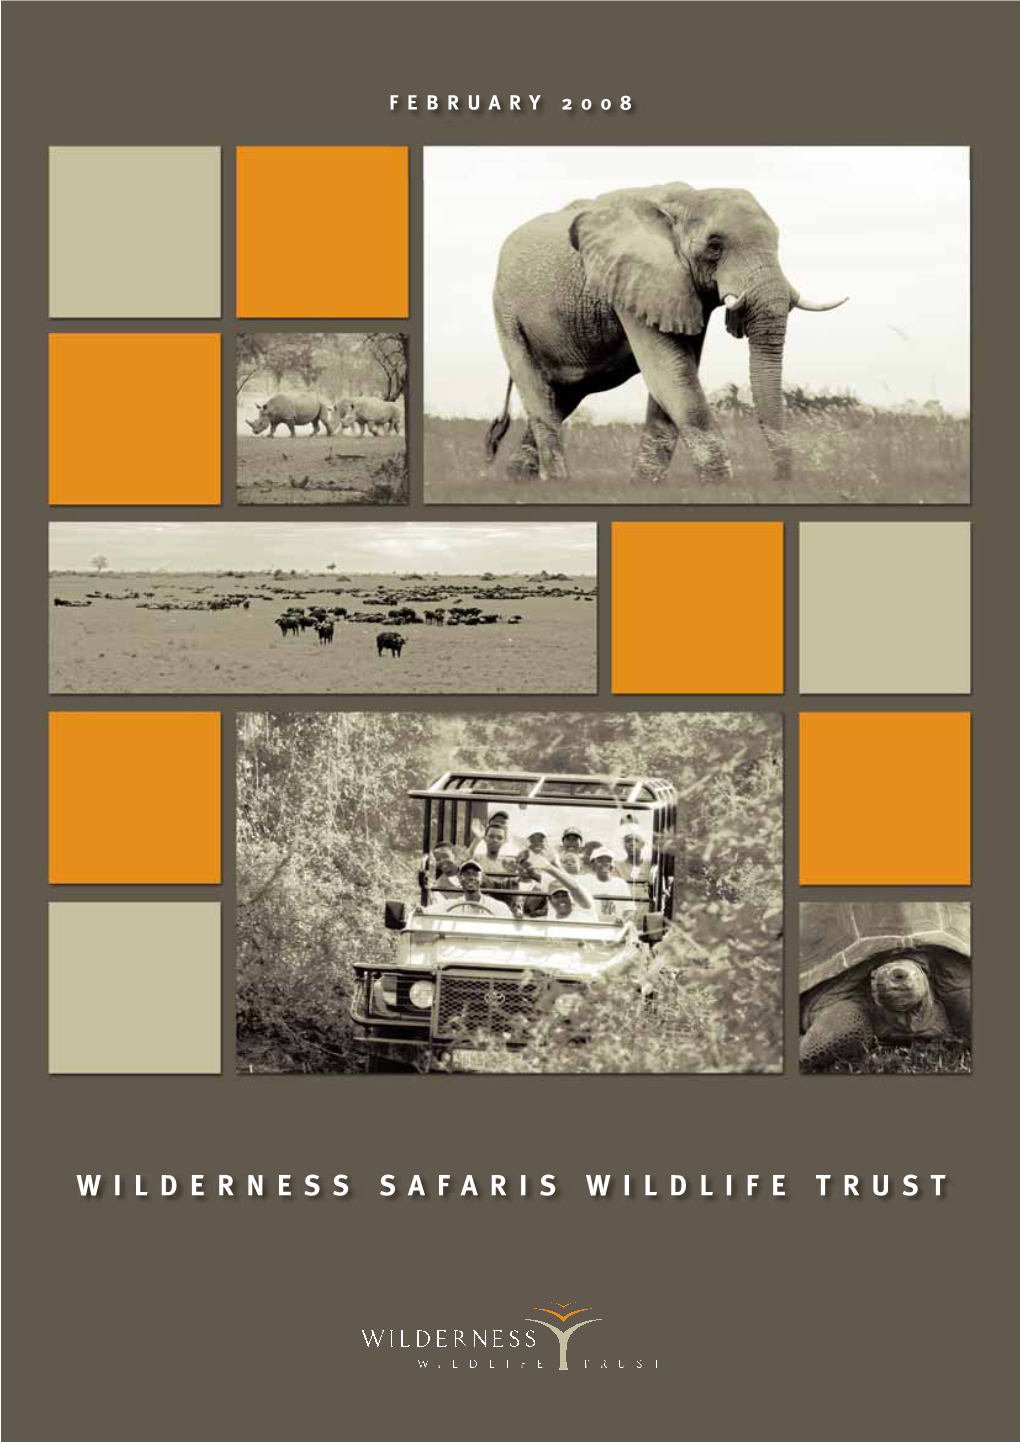 Wilderness Safaris Wildlife Trust Contents